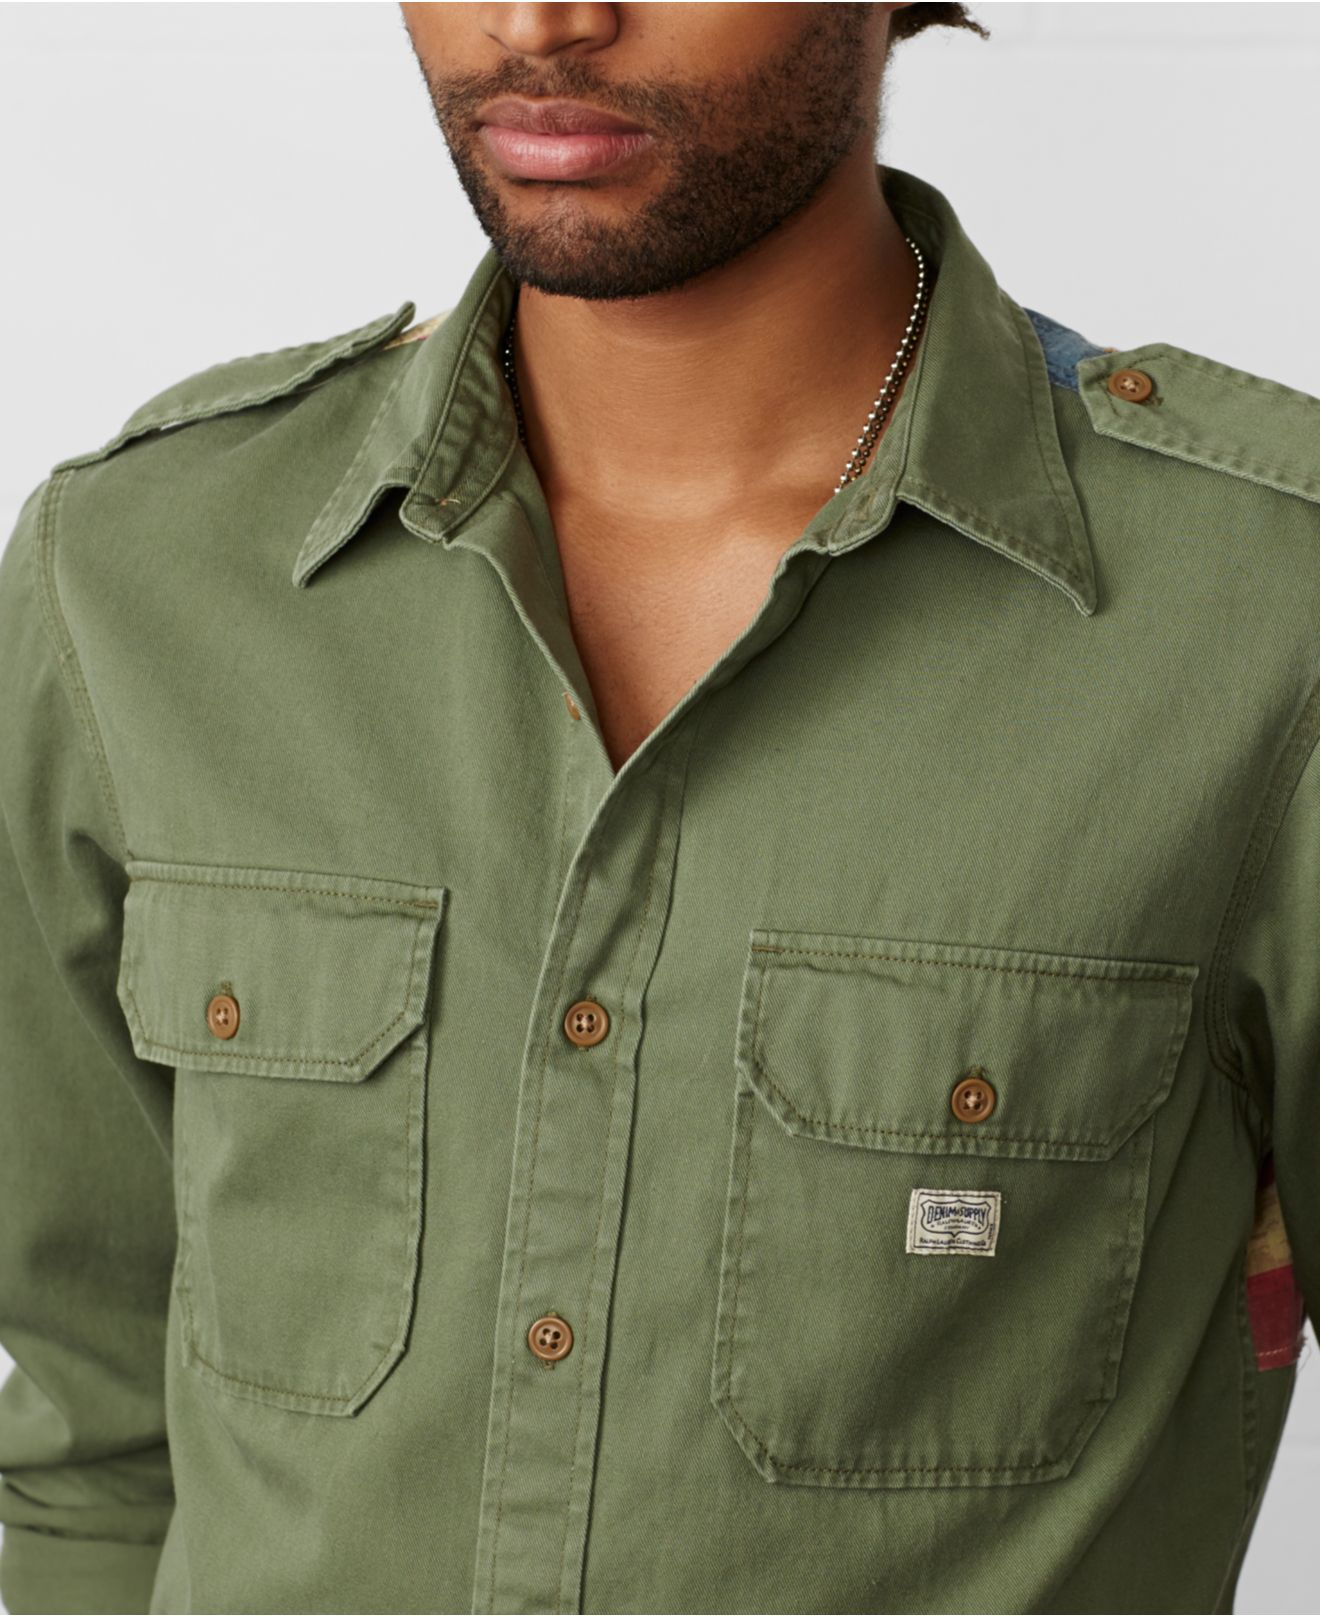 Denim Supply Ralph Lauren Green Flag Back Military Shirt Product 1 23917641 3 335724403 Normal 